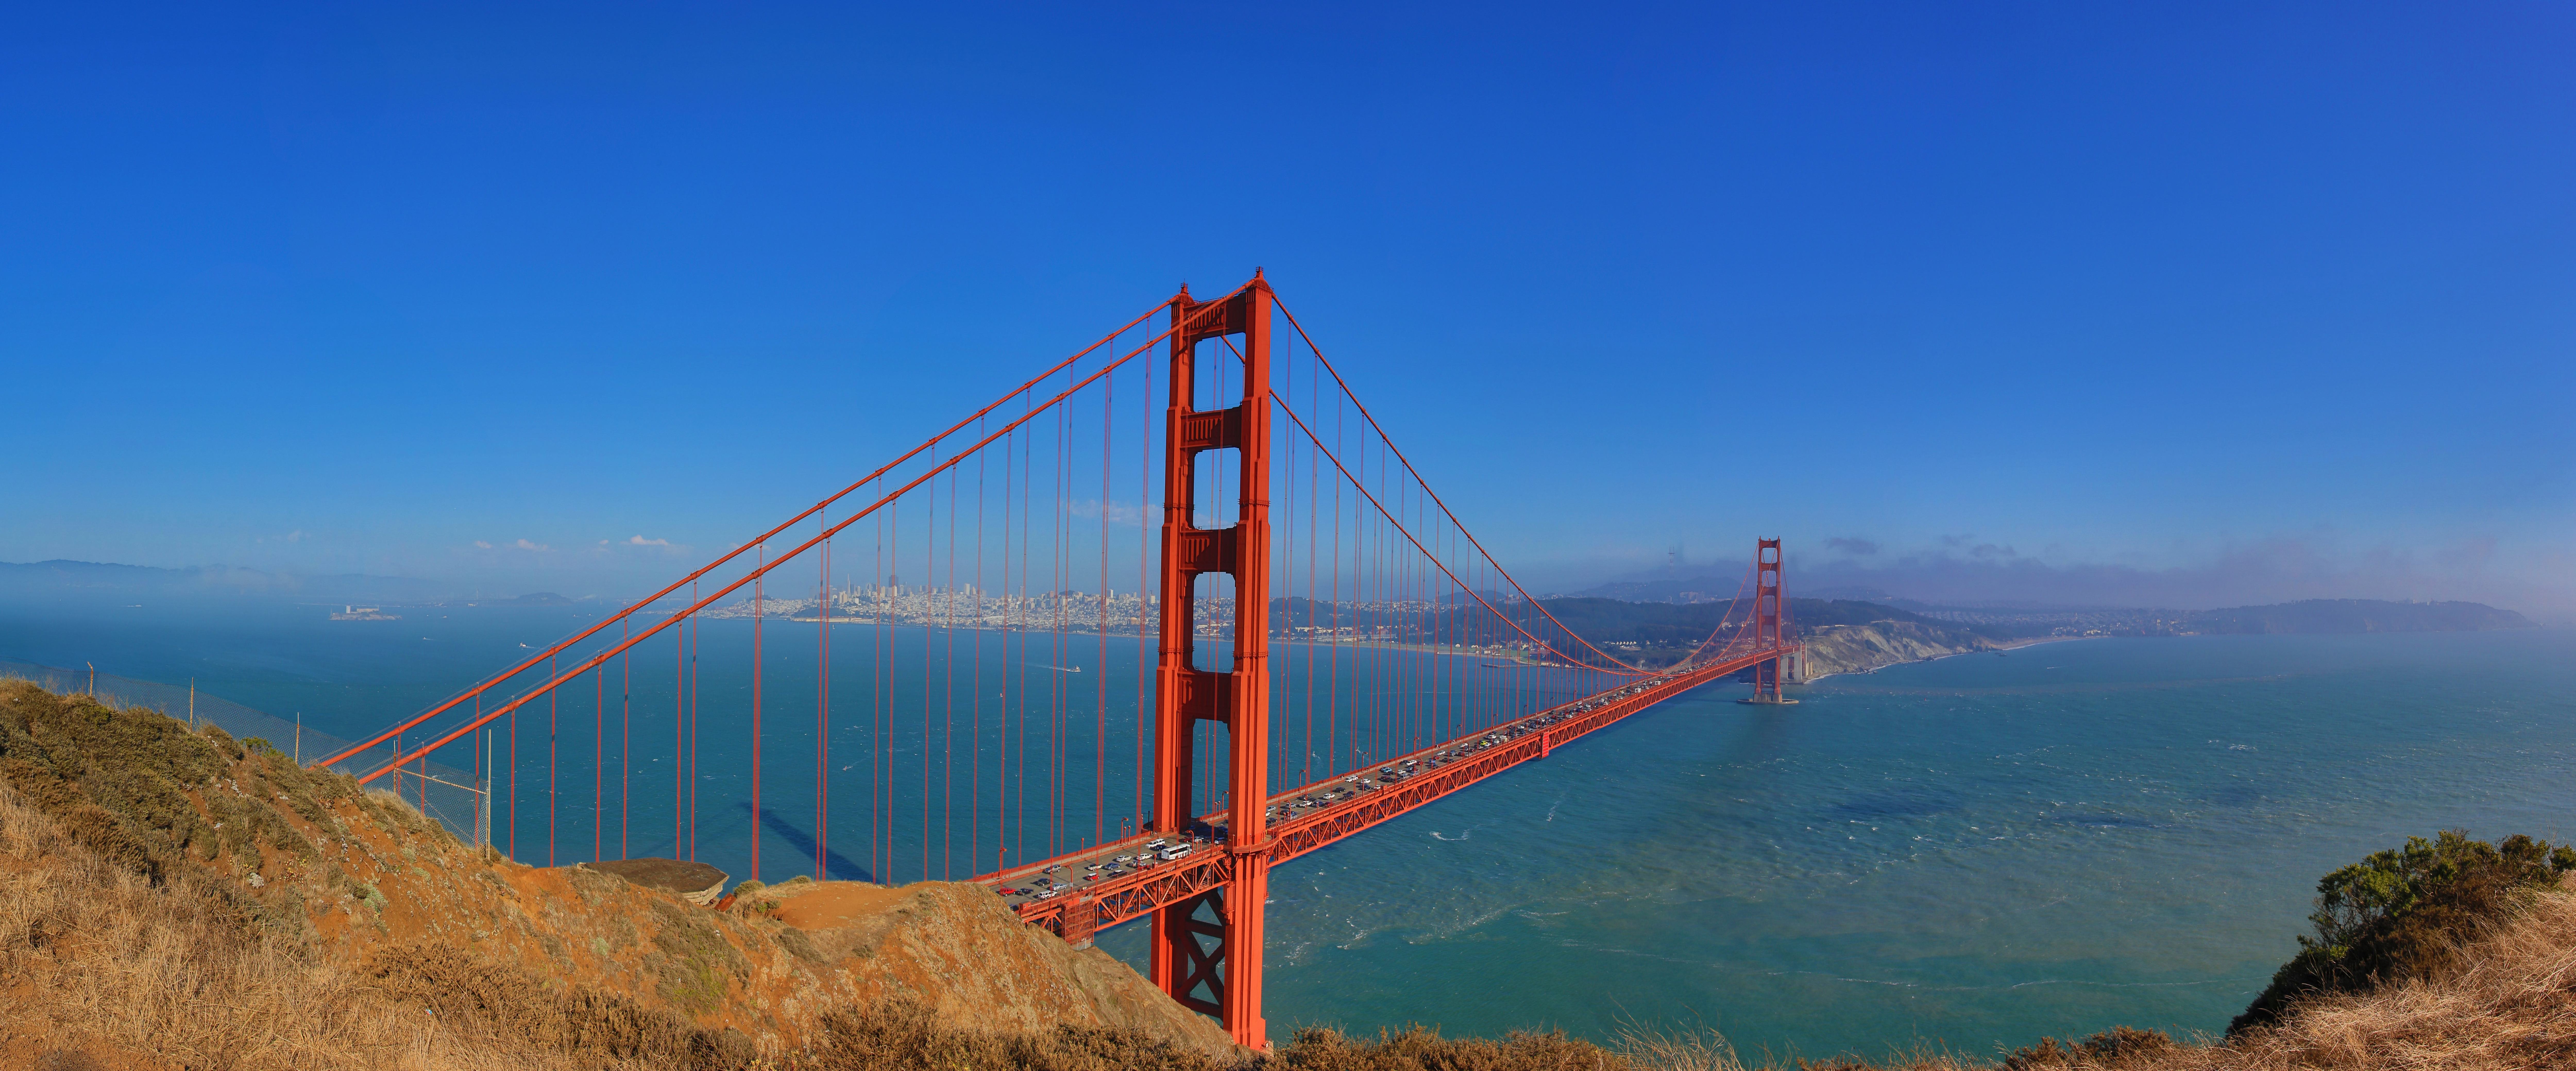 Golden Gate 8k Ultra HD Wallpaper Background Image 12000x4987